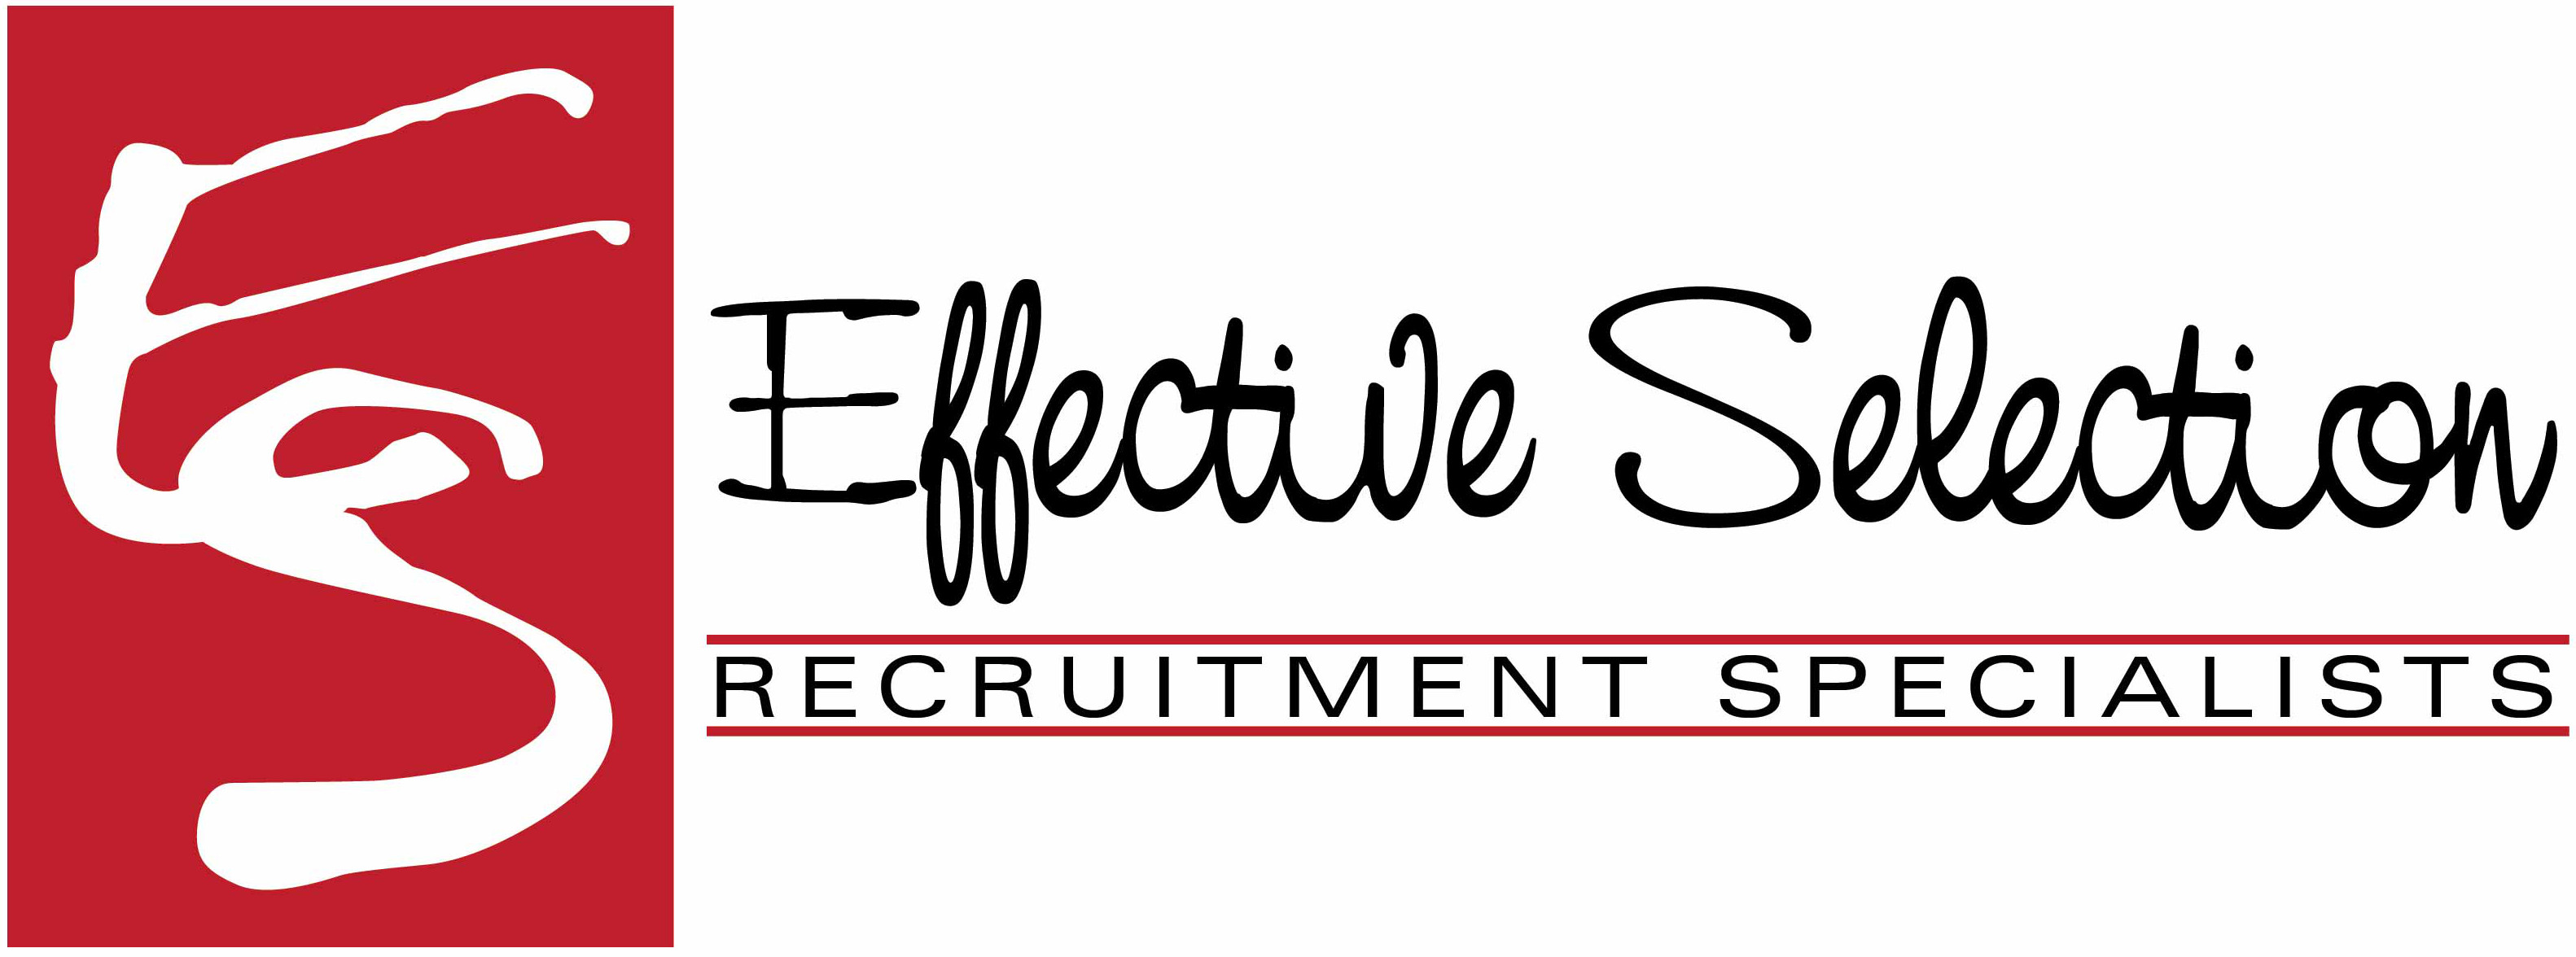 Effective Selection (Unverified) logo